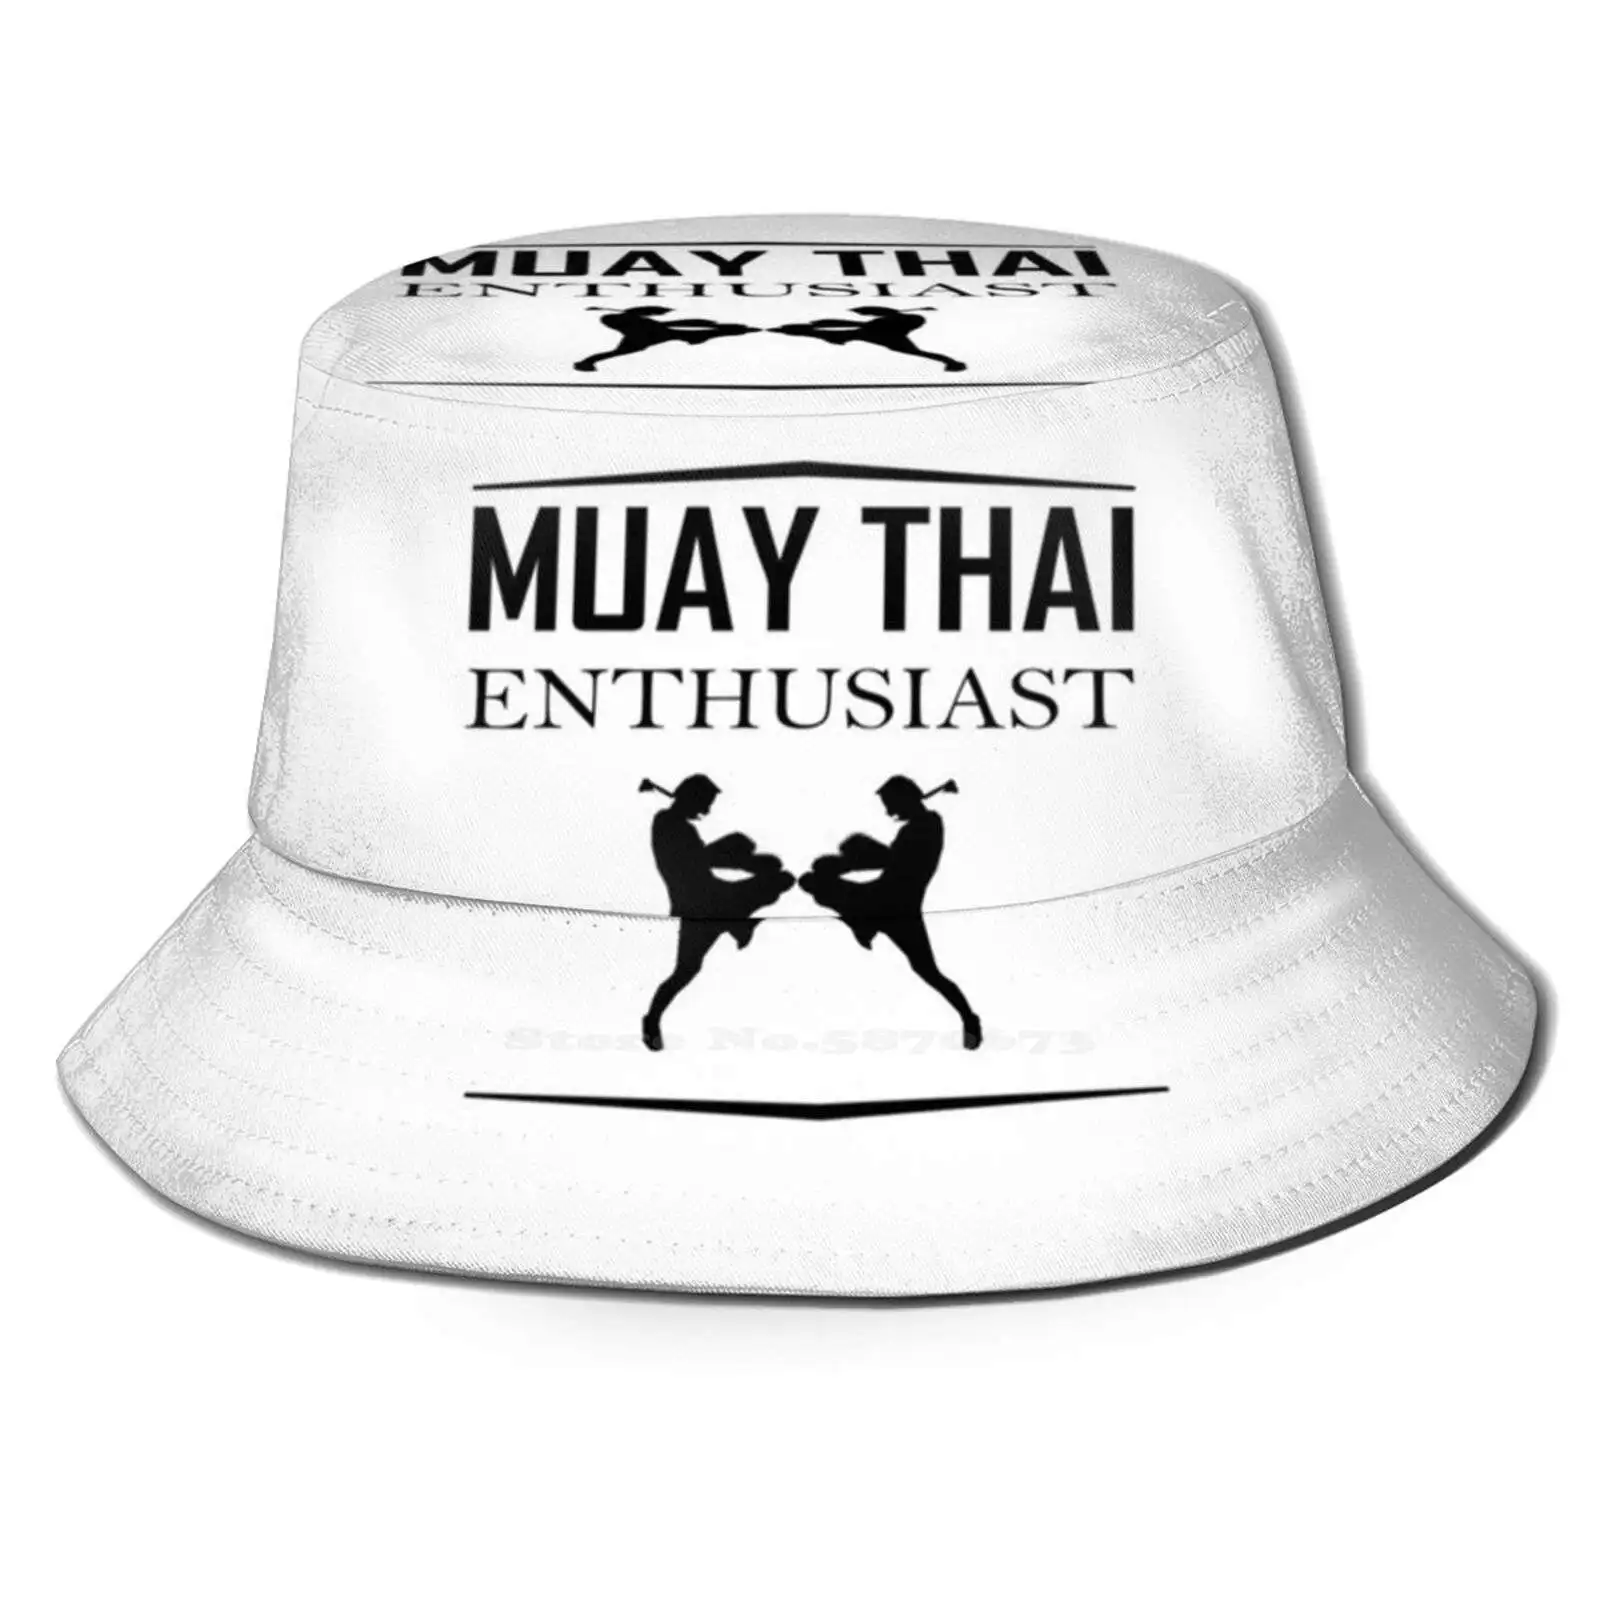 Muay Thai Meraklısı Unisex Balıkçı Şapka Kova Şapka Tay Muay Thai Tay Boks Tayland Tay Boksör Tay Boks Atasözü Tay